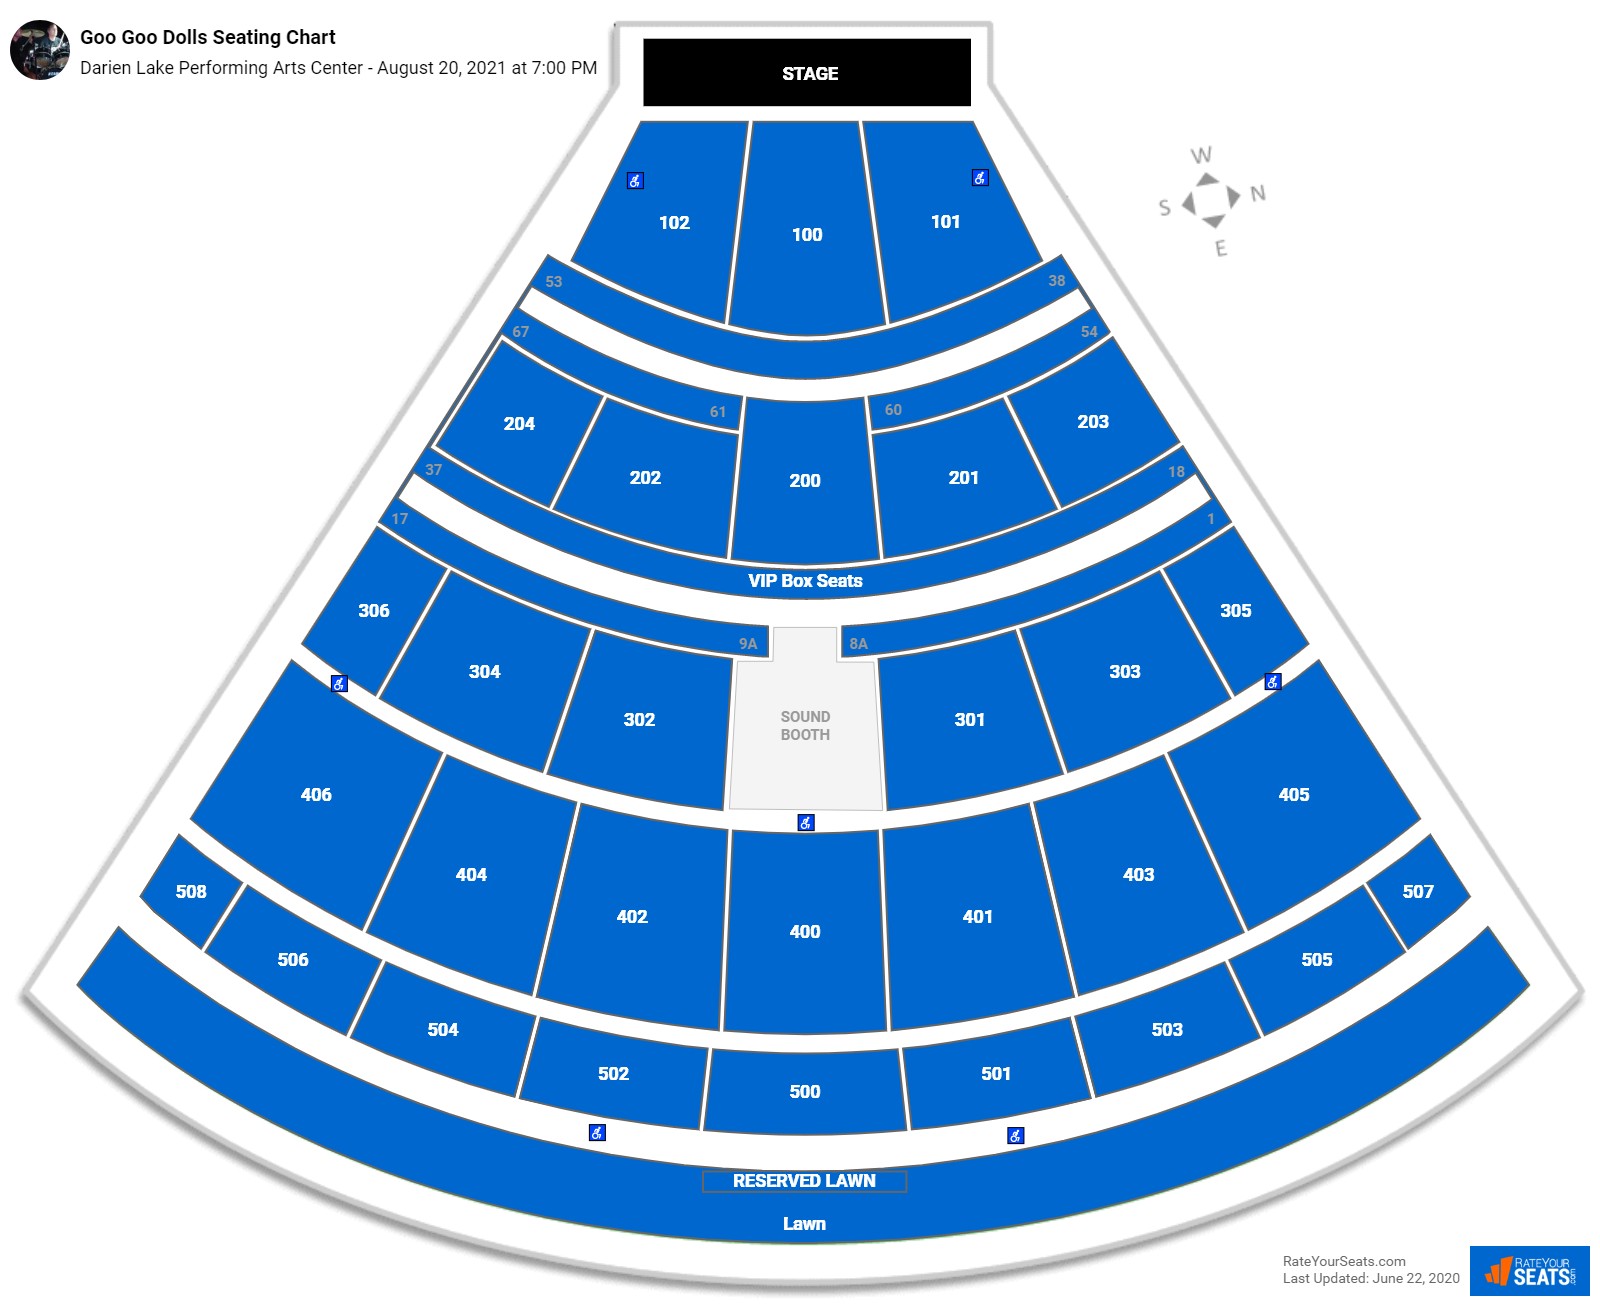 Darien Lake Performing Arts Center Seating Chart - RateYourSeats.com